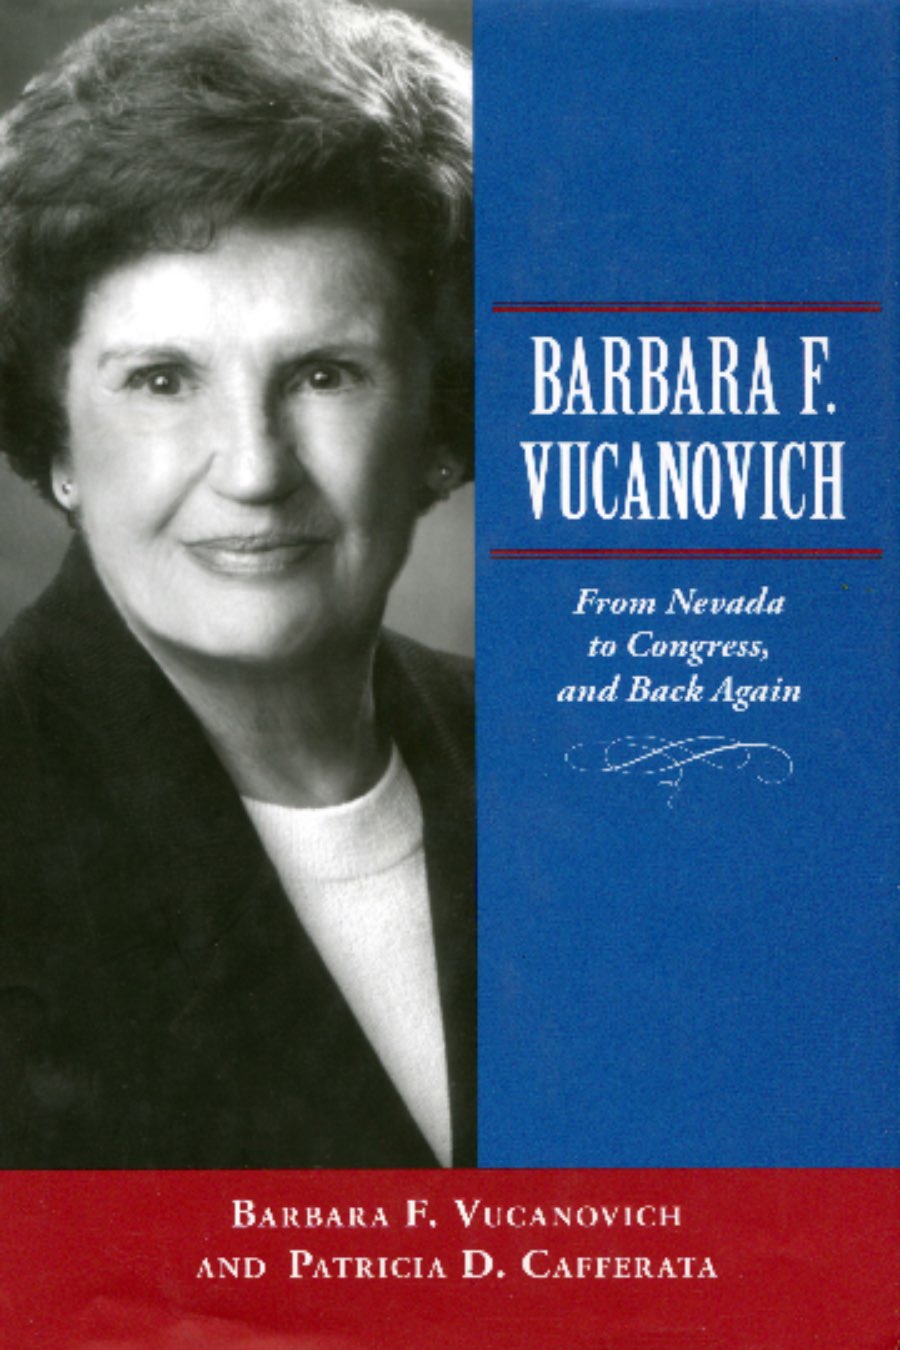 Barbara F. Vucanovich From Nevada to Congress, and Back Again Image